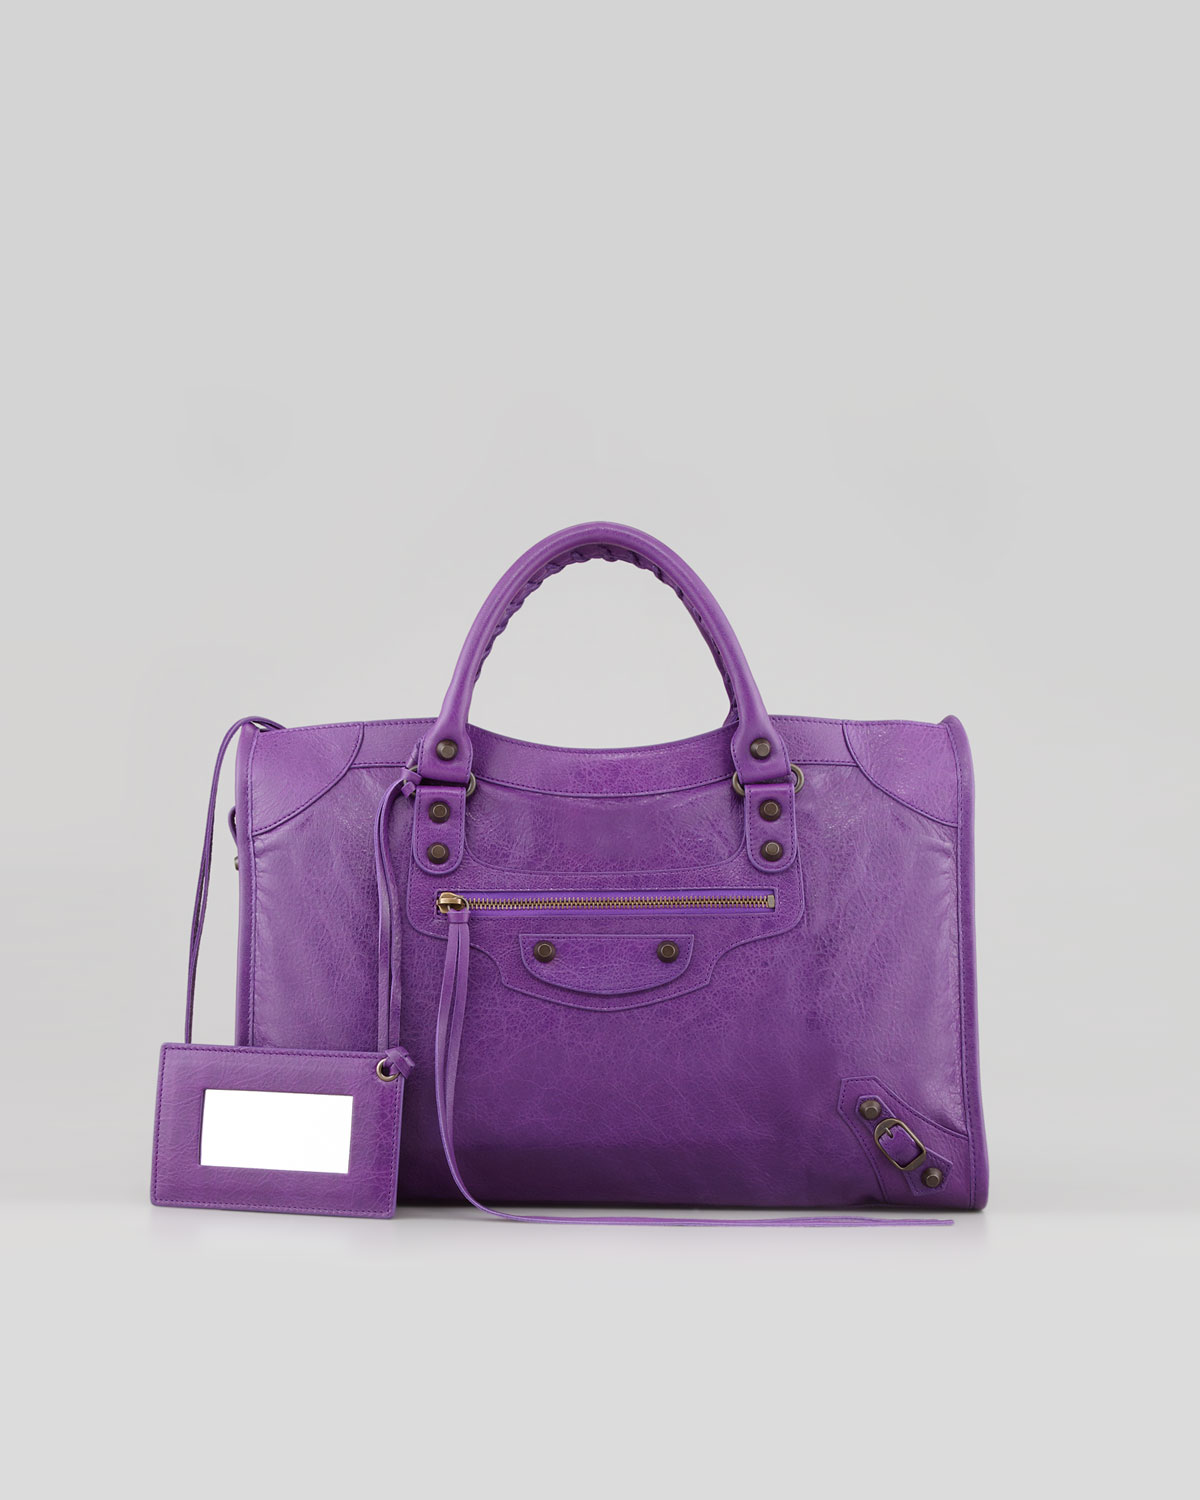 Lyst - Balenciaga Classic City Bag in Purple